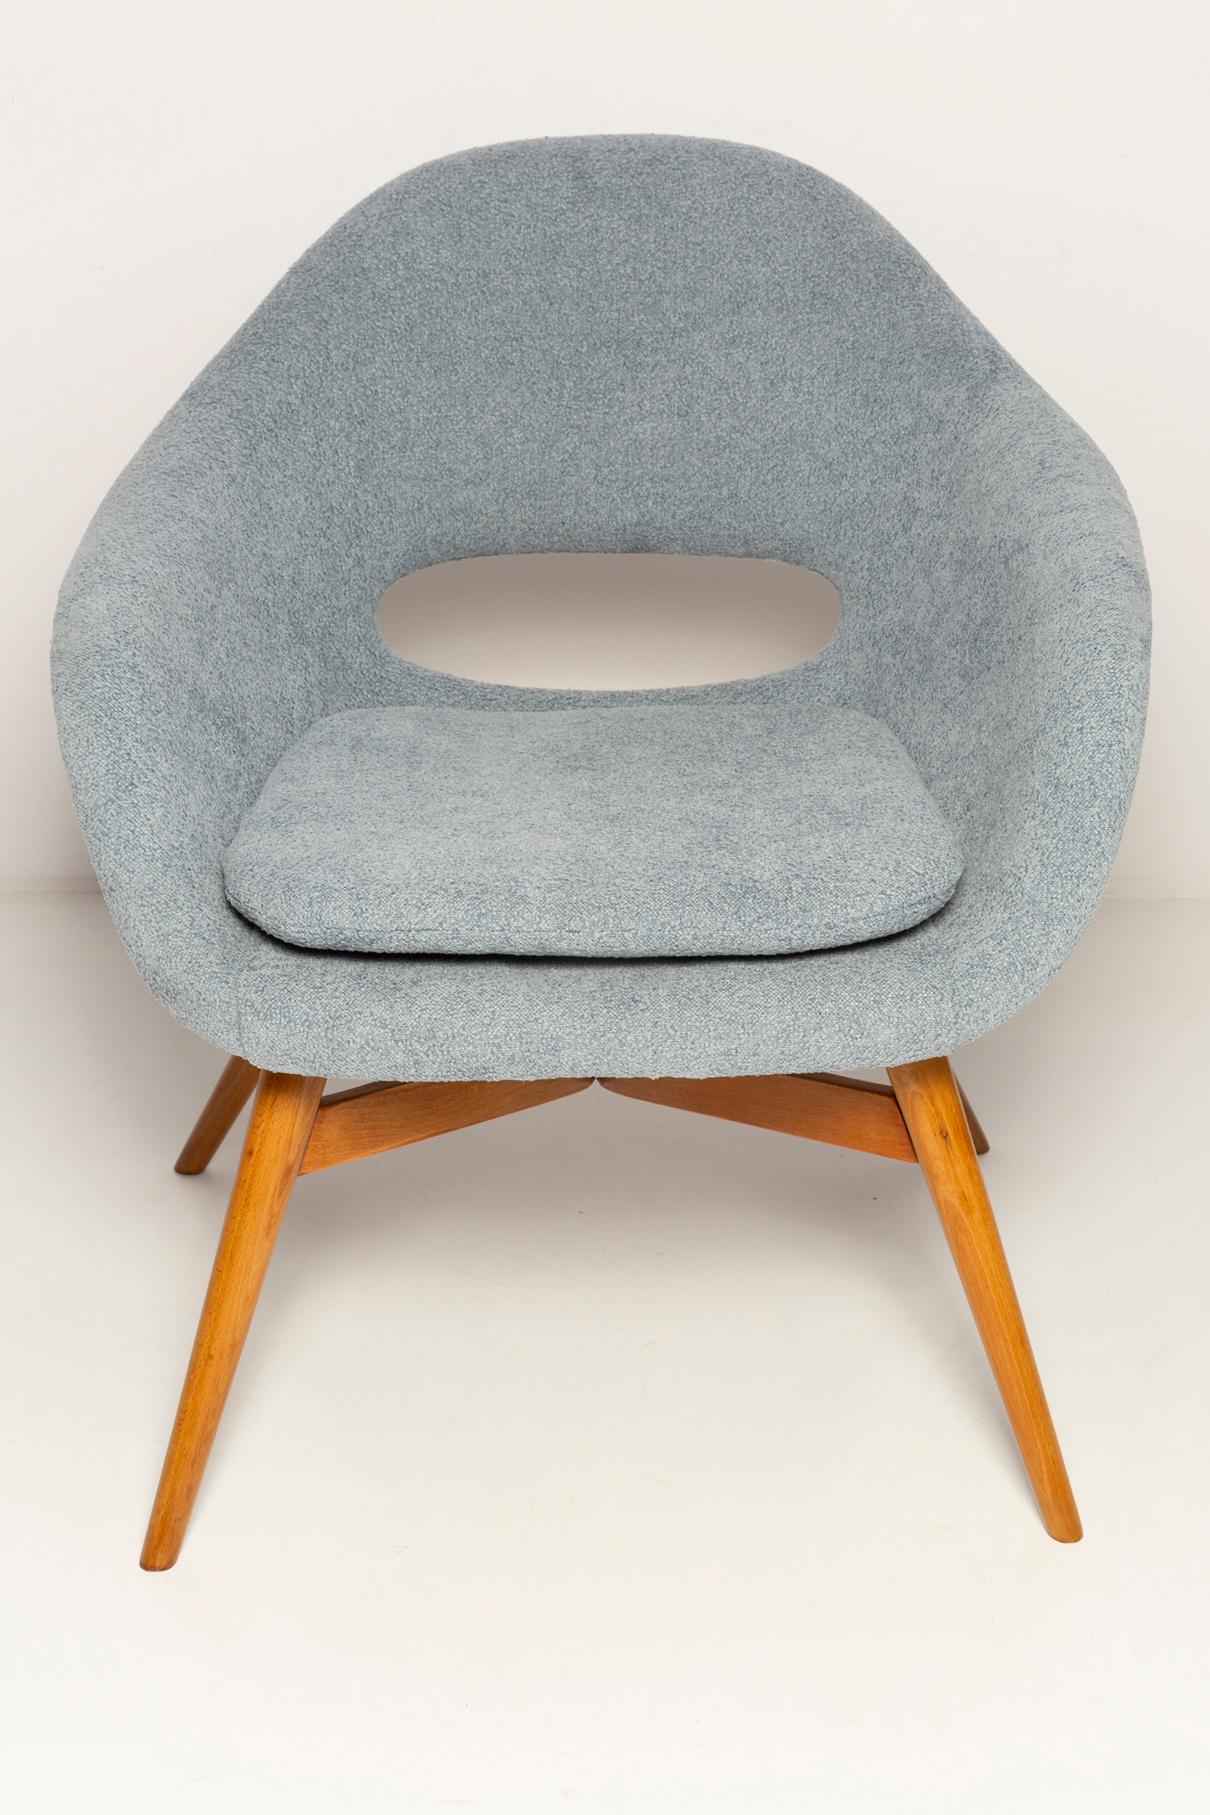 Hand-Crafted Mid-Century Light Blue Shell Chair, Miroslav Navratil, Czechoslovakia, 1960s For Sale